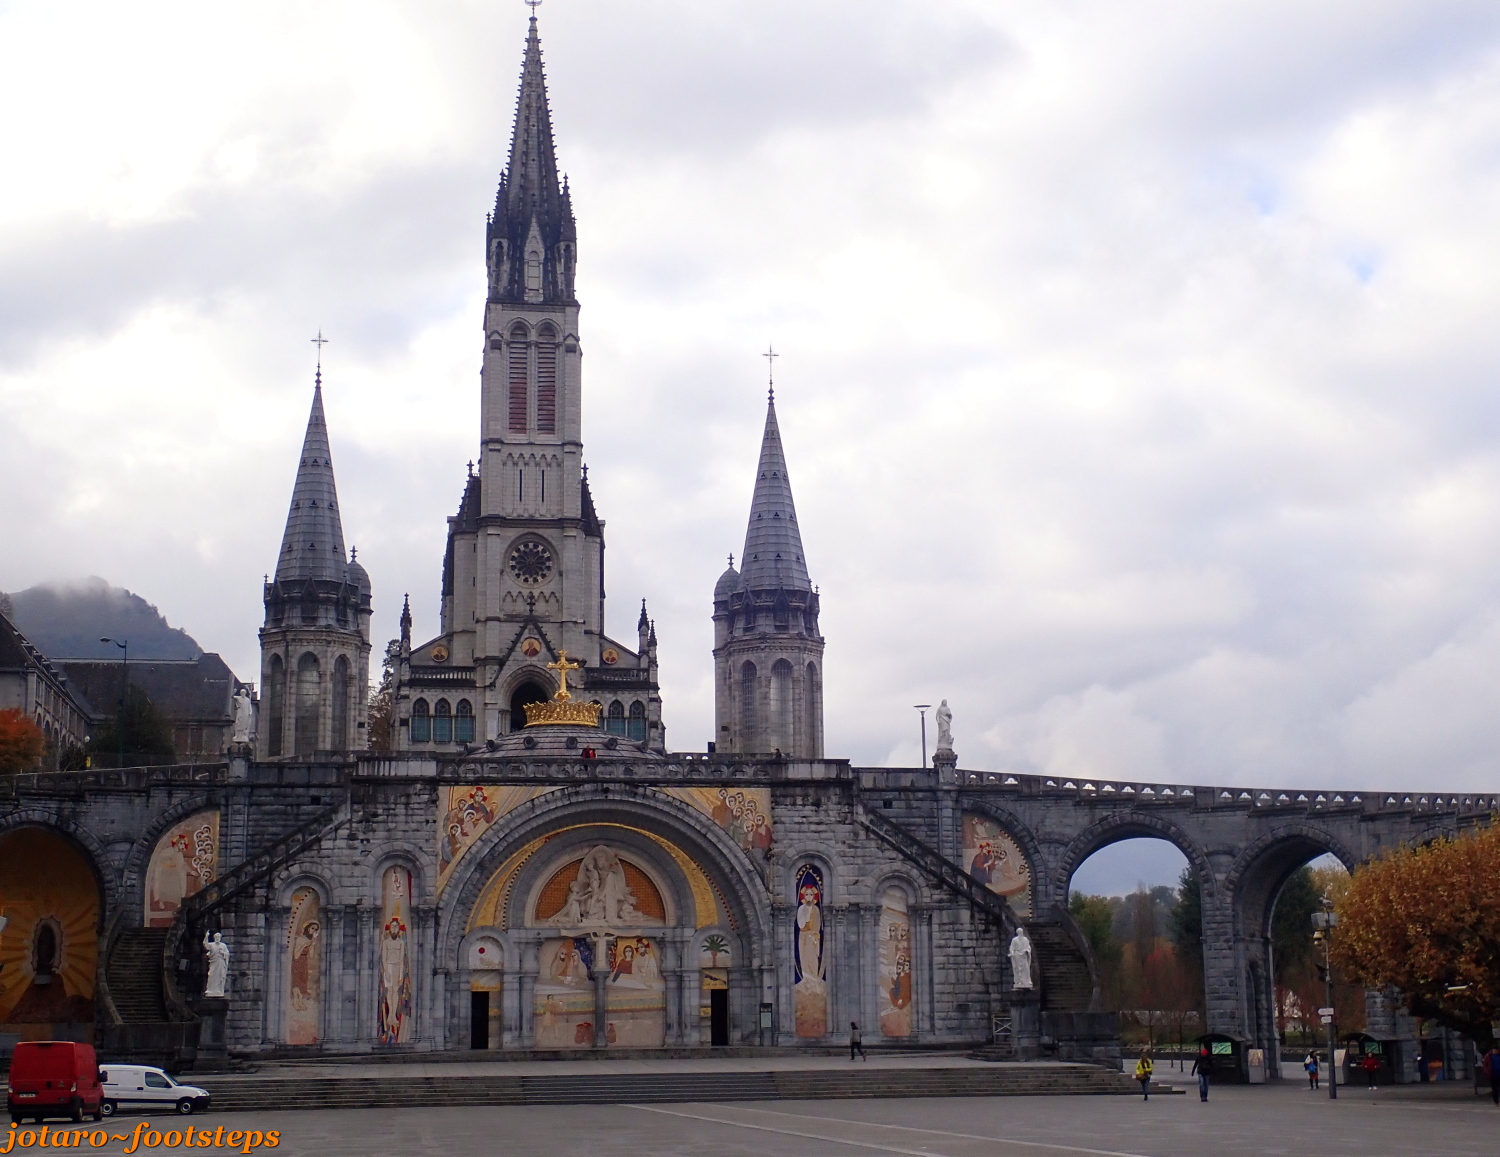 Footsteps - Jotaro's Travels: Sites : Sanctuary of Our Lady of Lourdes ...